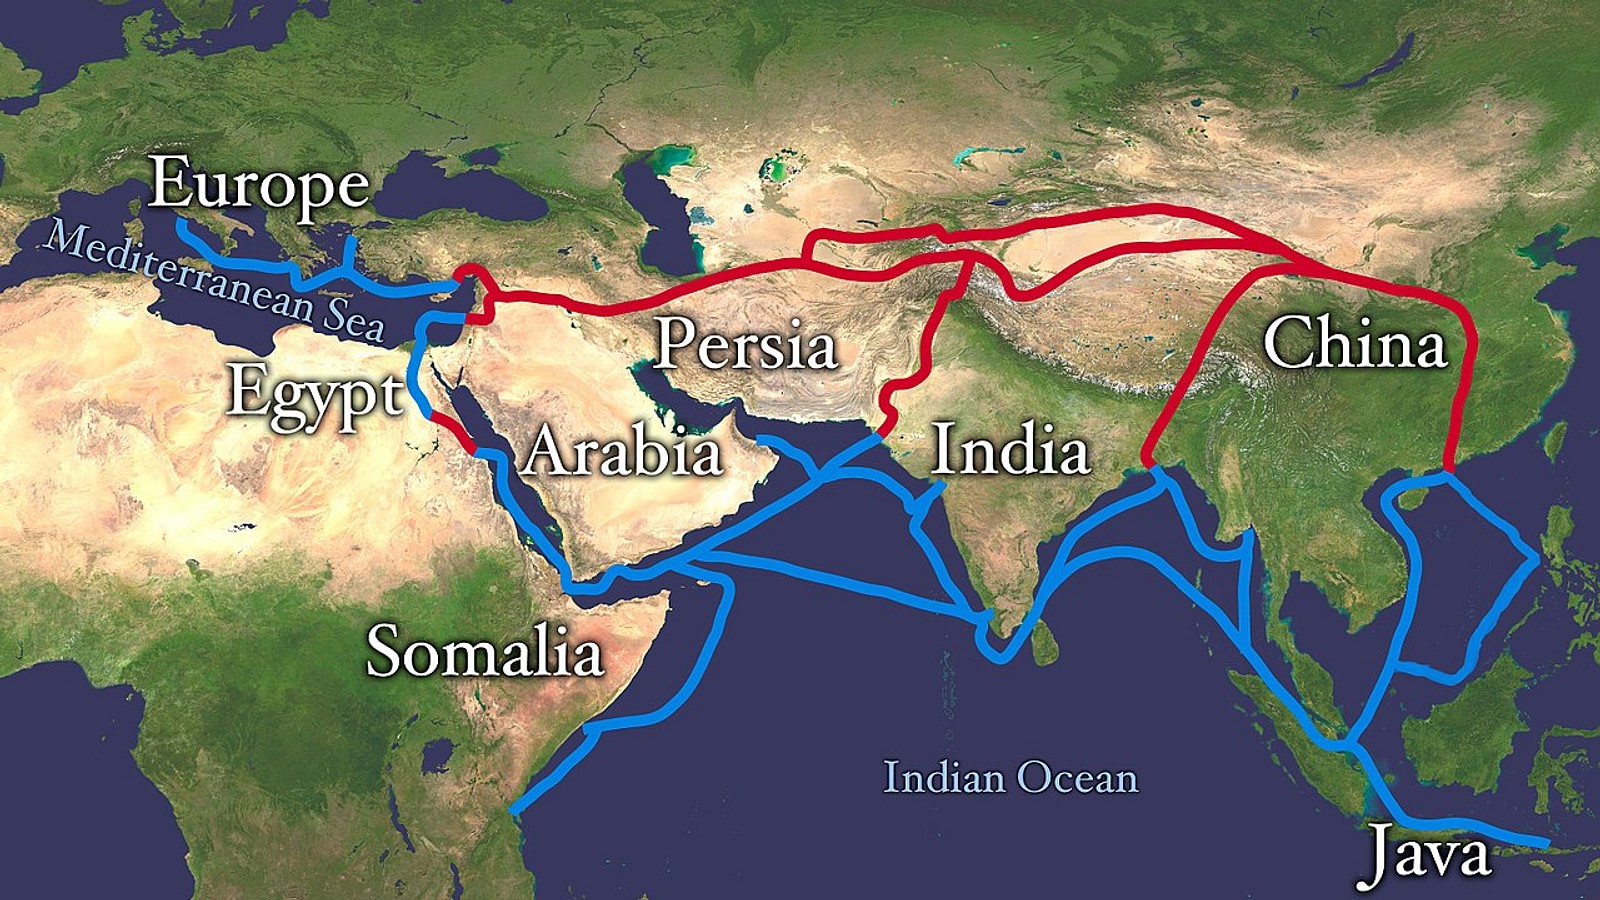 Silk Road - World History Encyclopedia